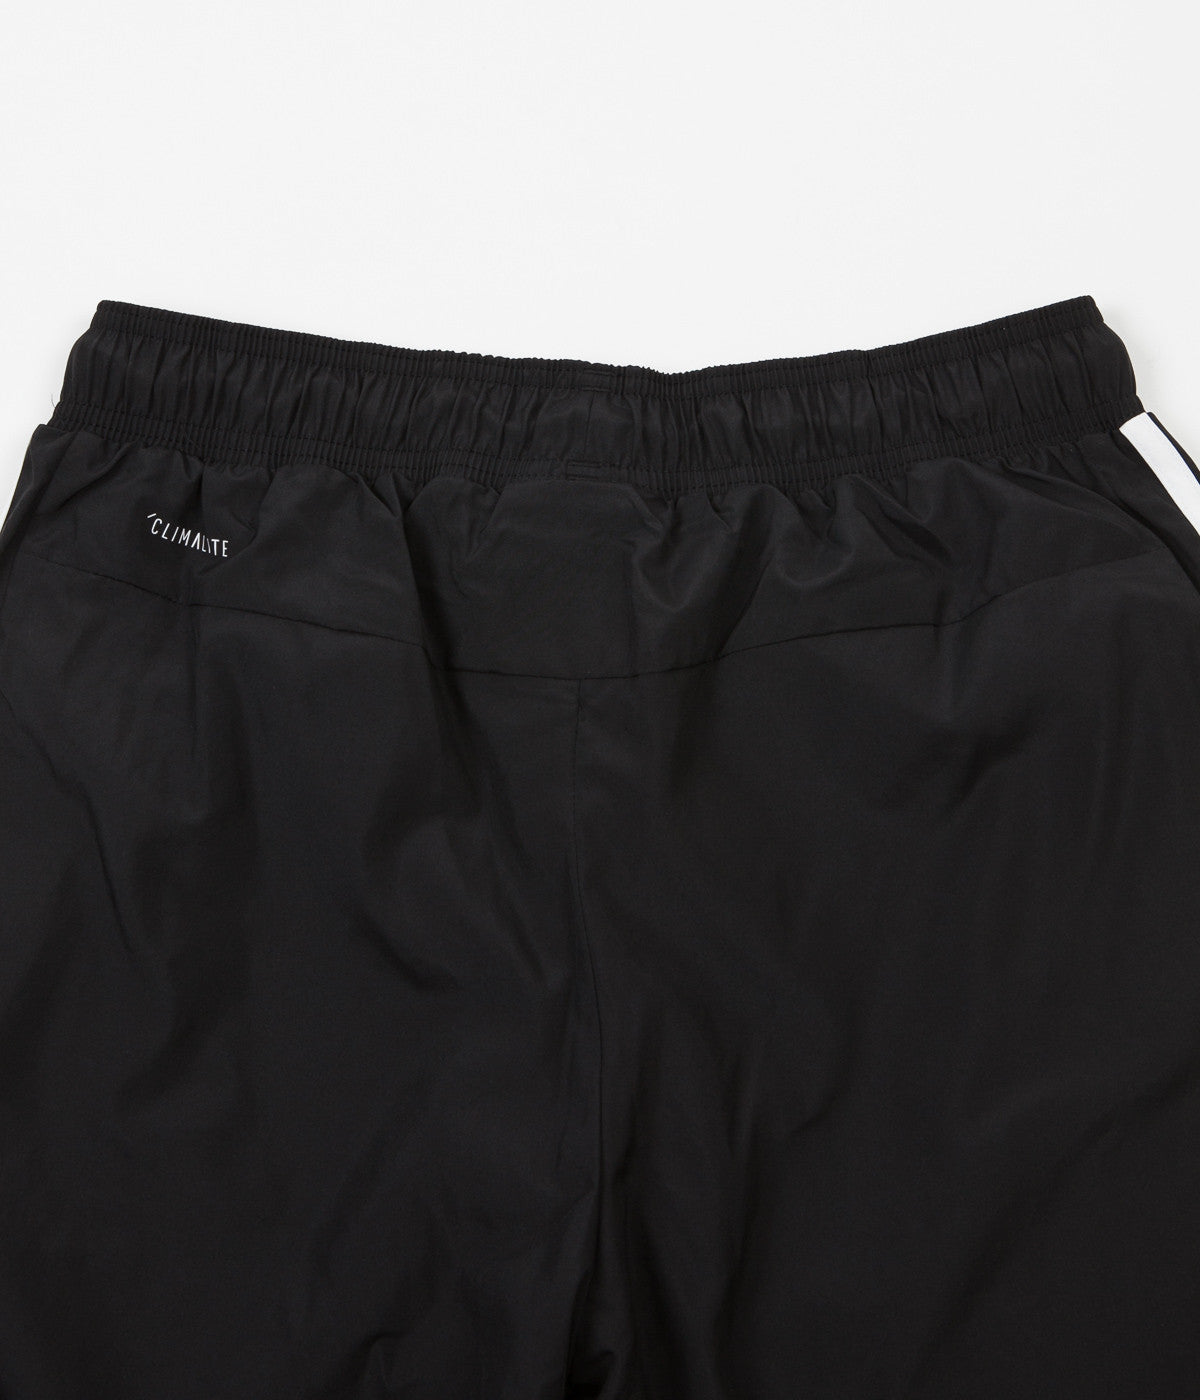 Adidas Classic Sweatpants - Black / White | Flatspot